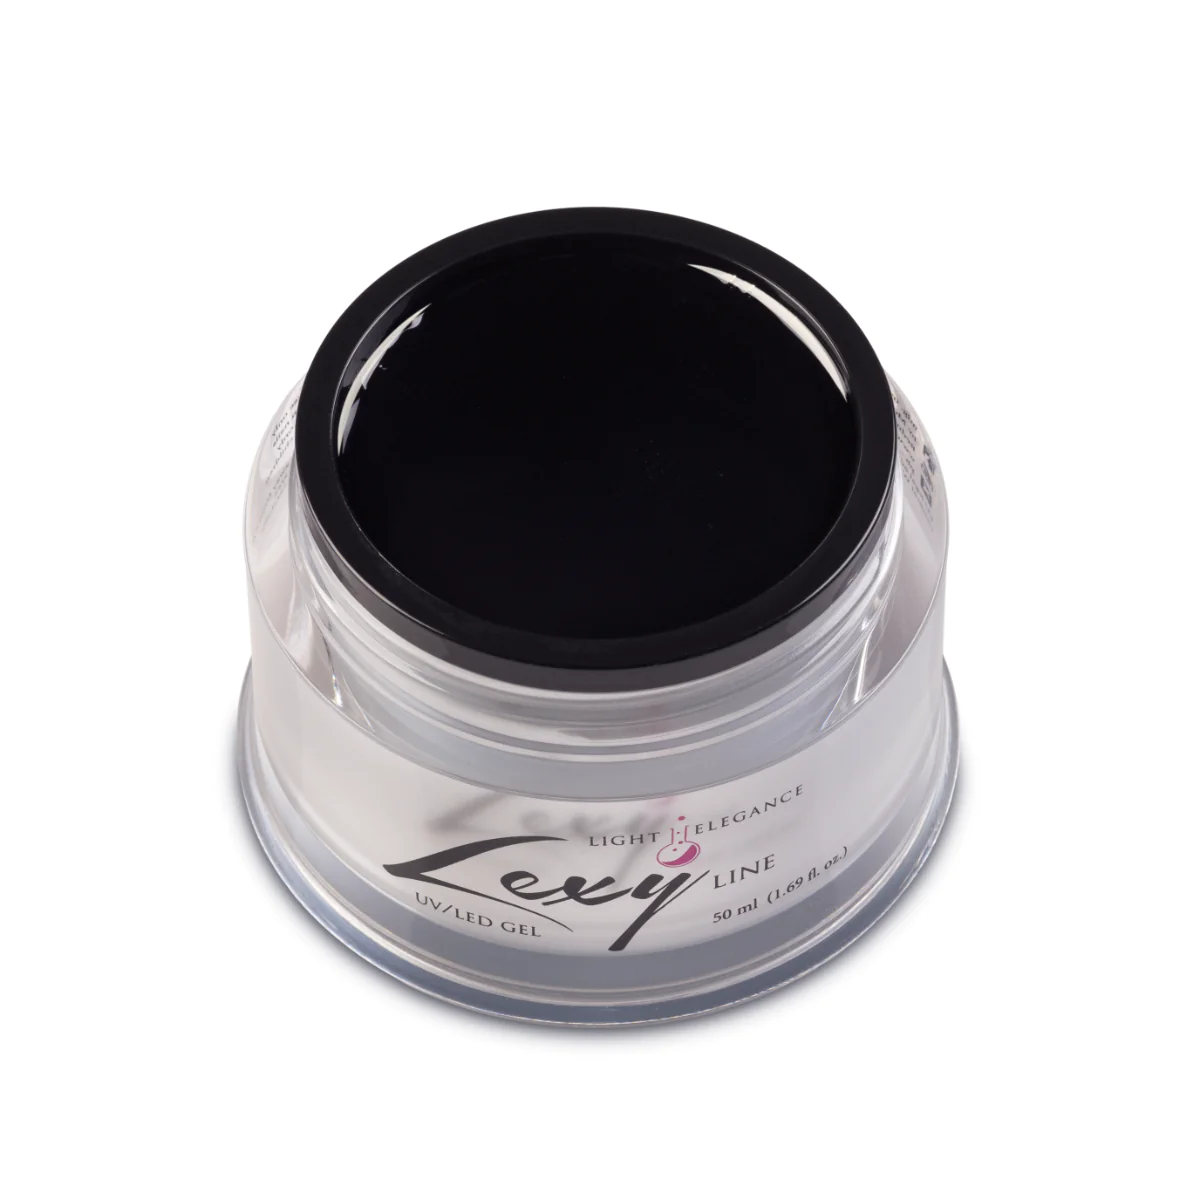 Light Elegance Lexy Line Gel - 1-Step (Clear) - Creata Beauty - Professional Beauty Products